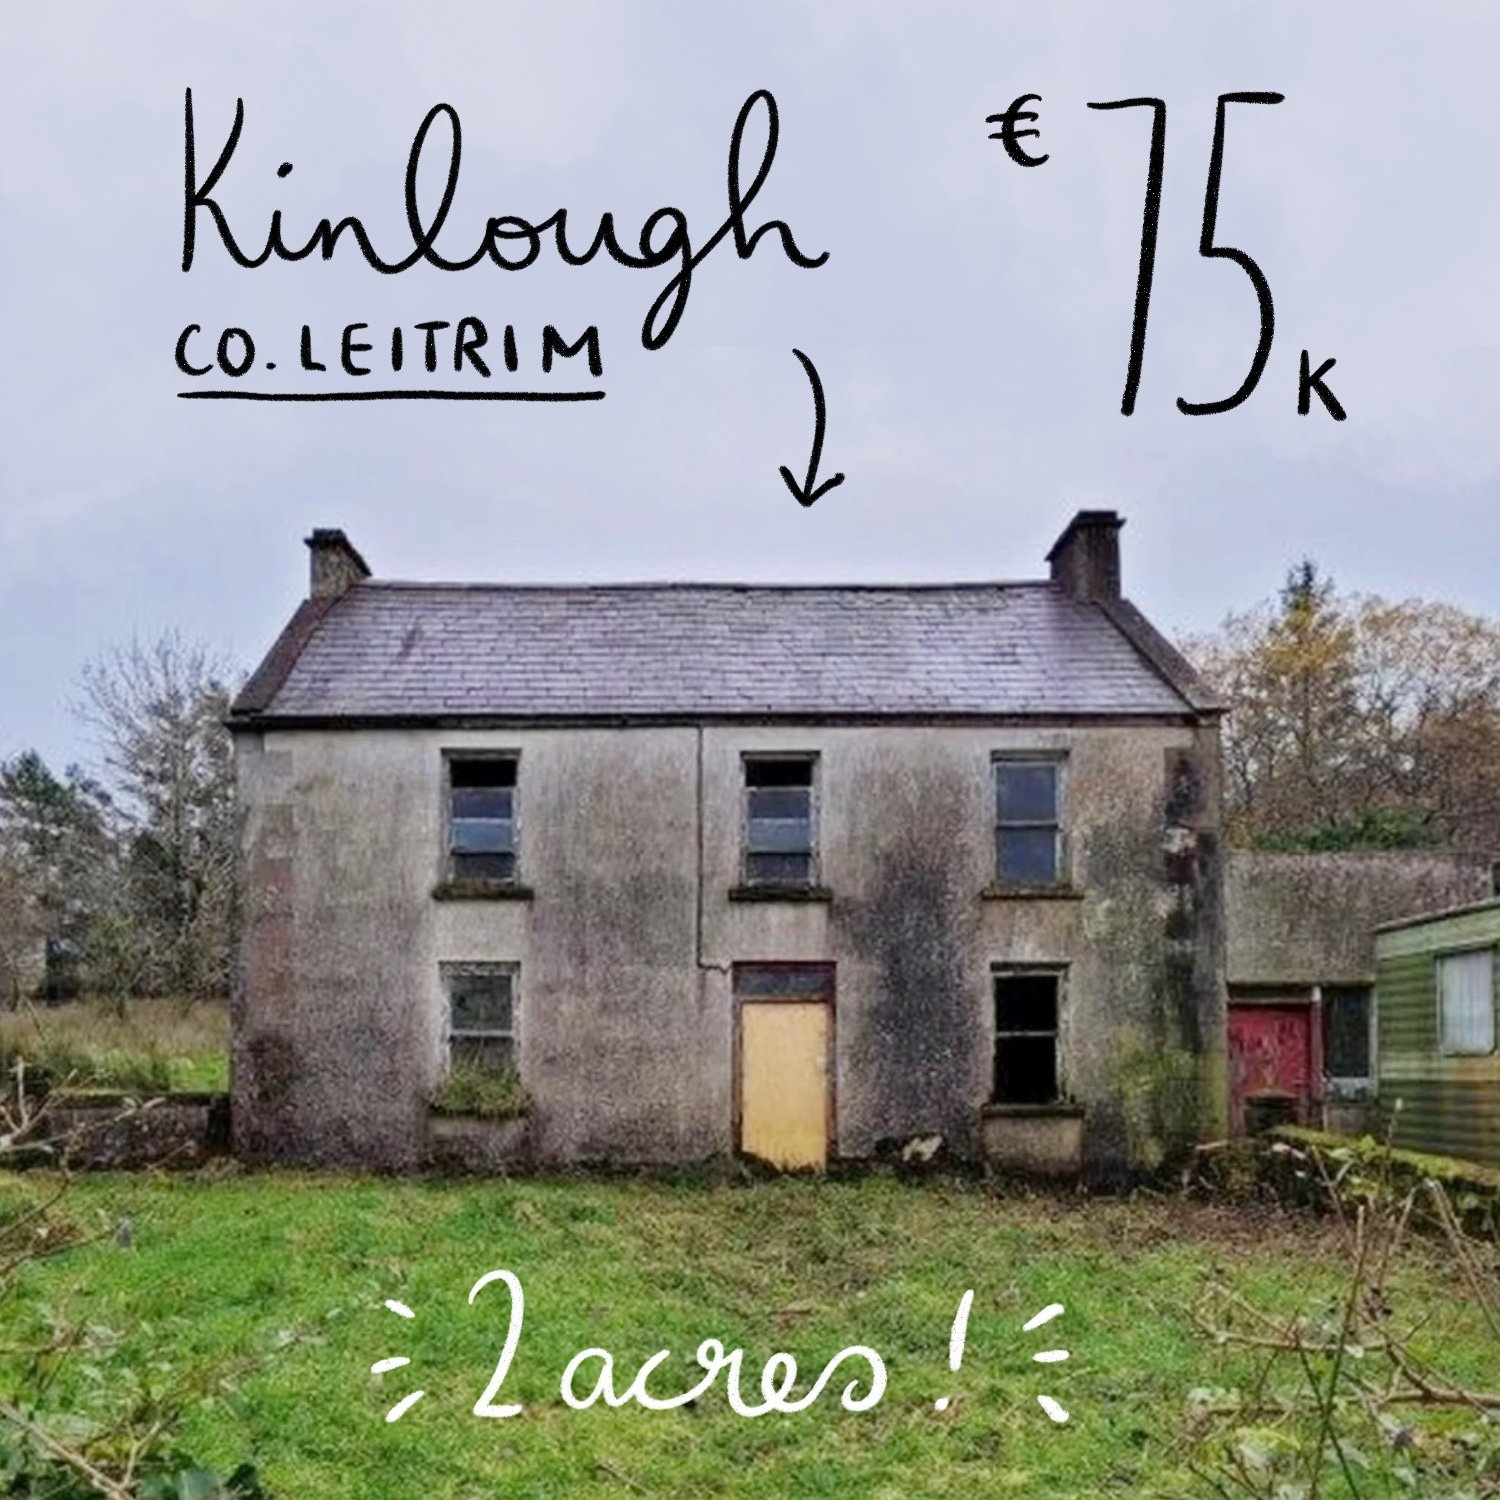 Aughavohil, Kinlough, Co. Leitrim. €75,000